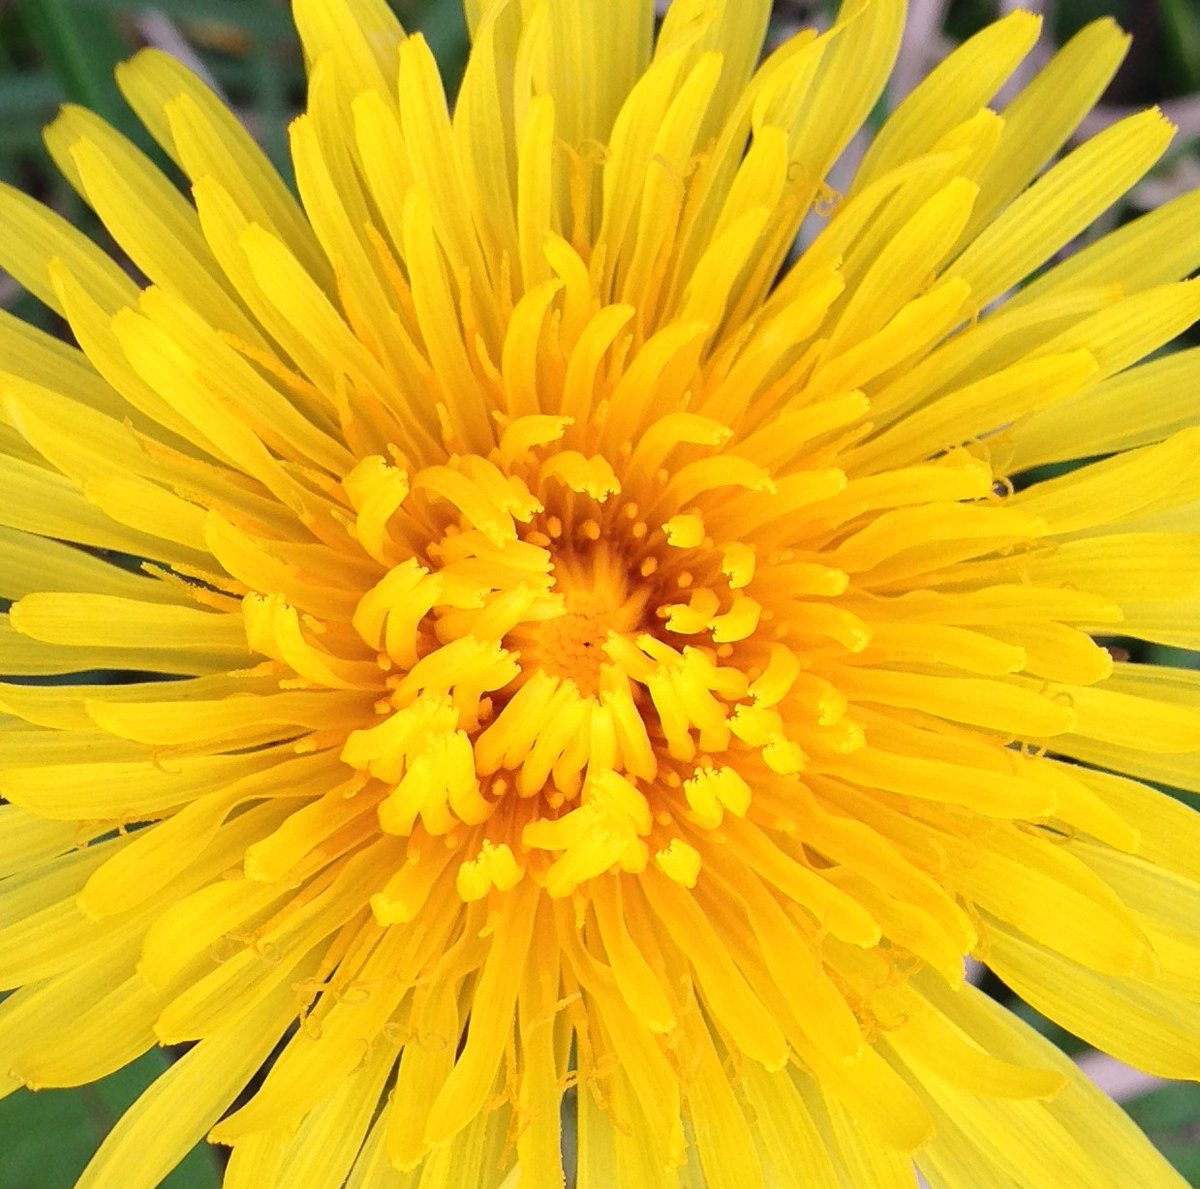 Happy colour Yellow 😁 #FlowersOfTwitter #FLOWER  #spring #summer #summersonic #MindfulLiving #MindfulPalettes #MentalHealthMatters #mindfulness #MentalHealthAwareness